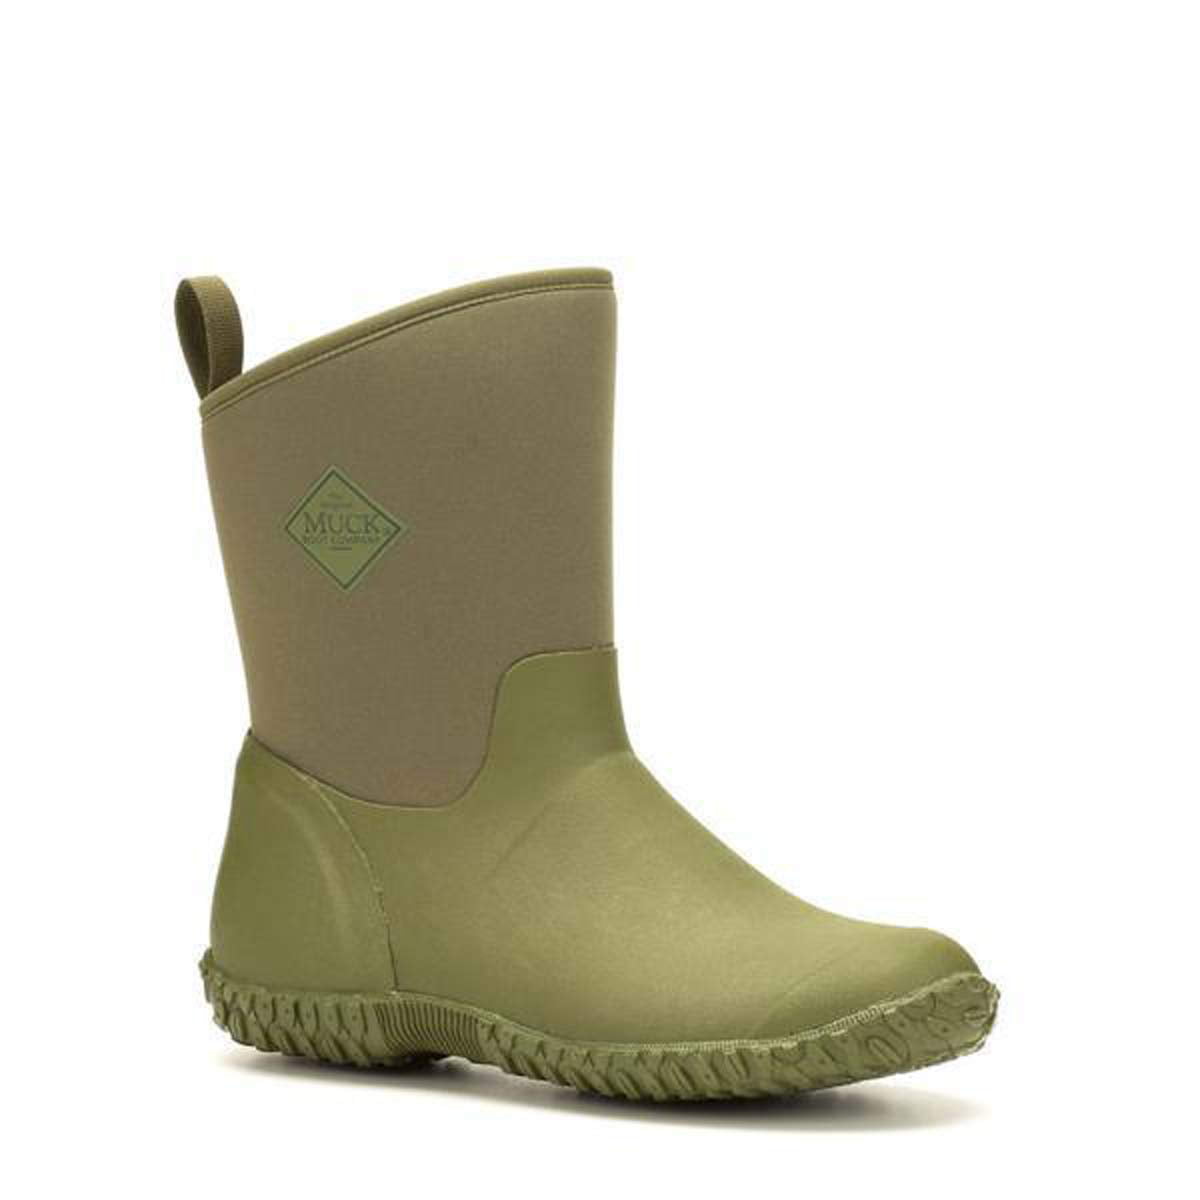 Muck Boots Muckster II moss green ladies waterproof breathable garden ankle boot 